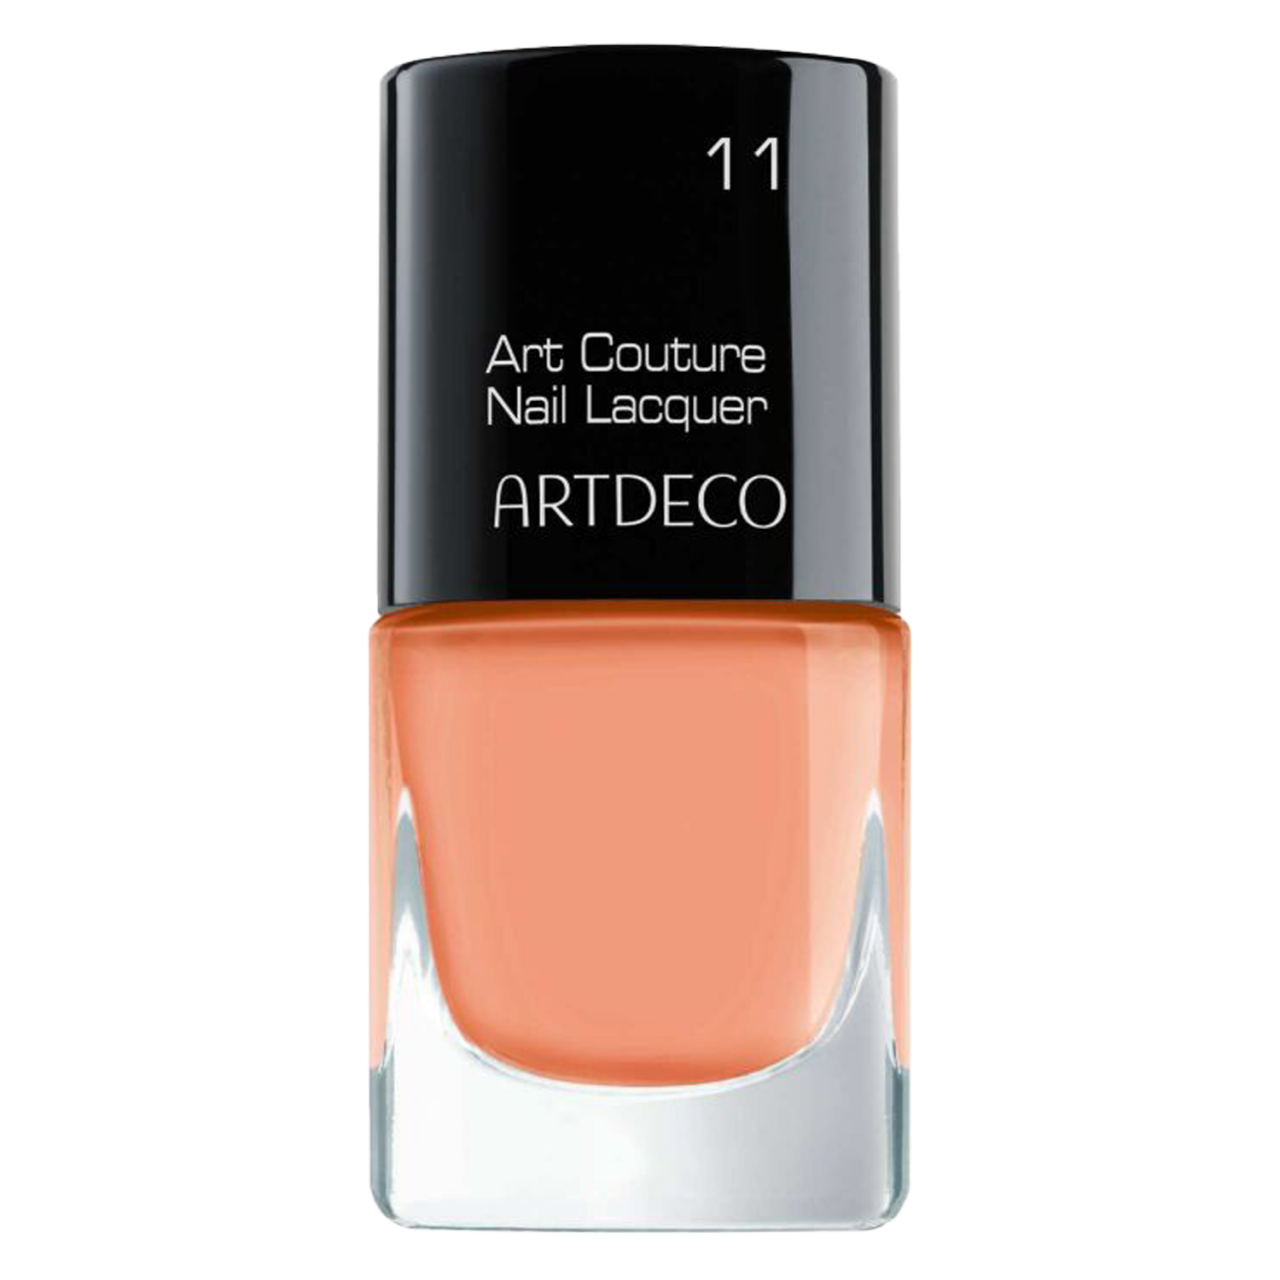 Art Couture - Nail Lacquer Marigold 11 von Artdeco